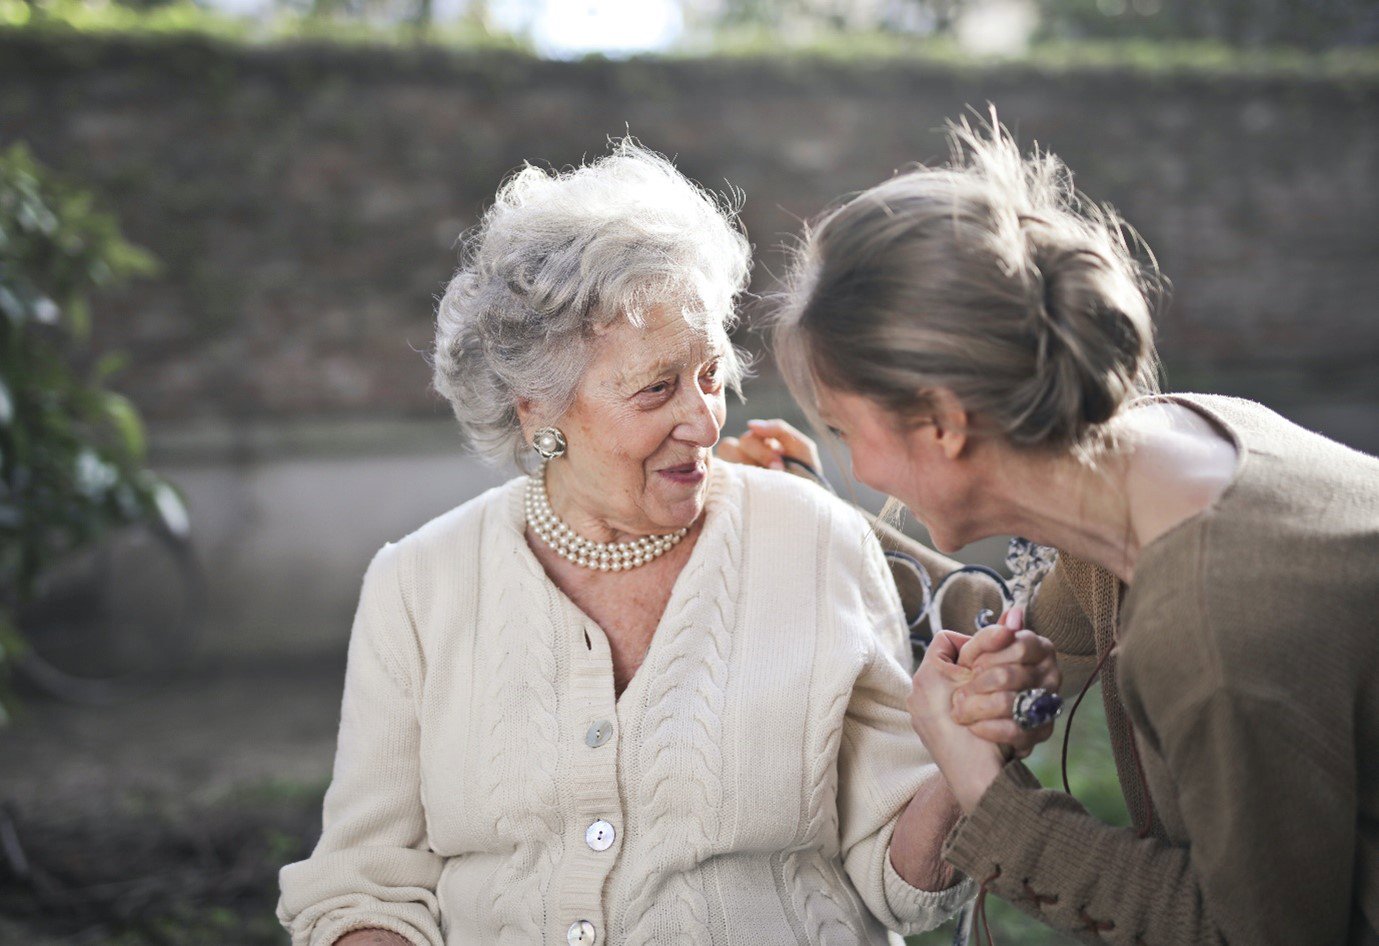 Two older women in conversation